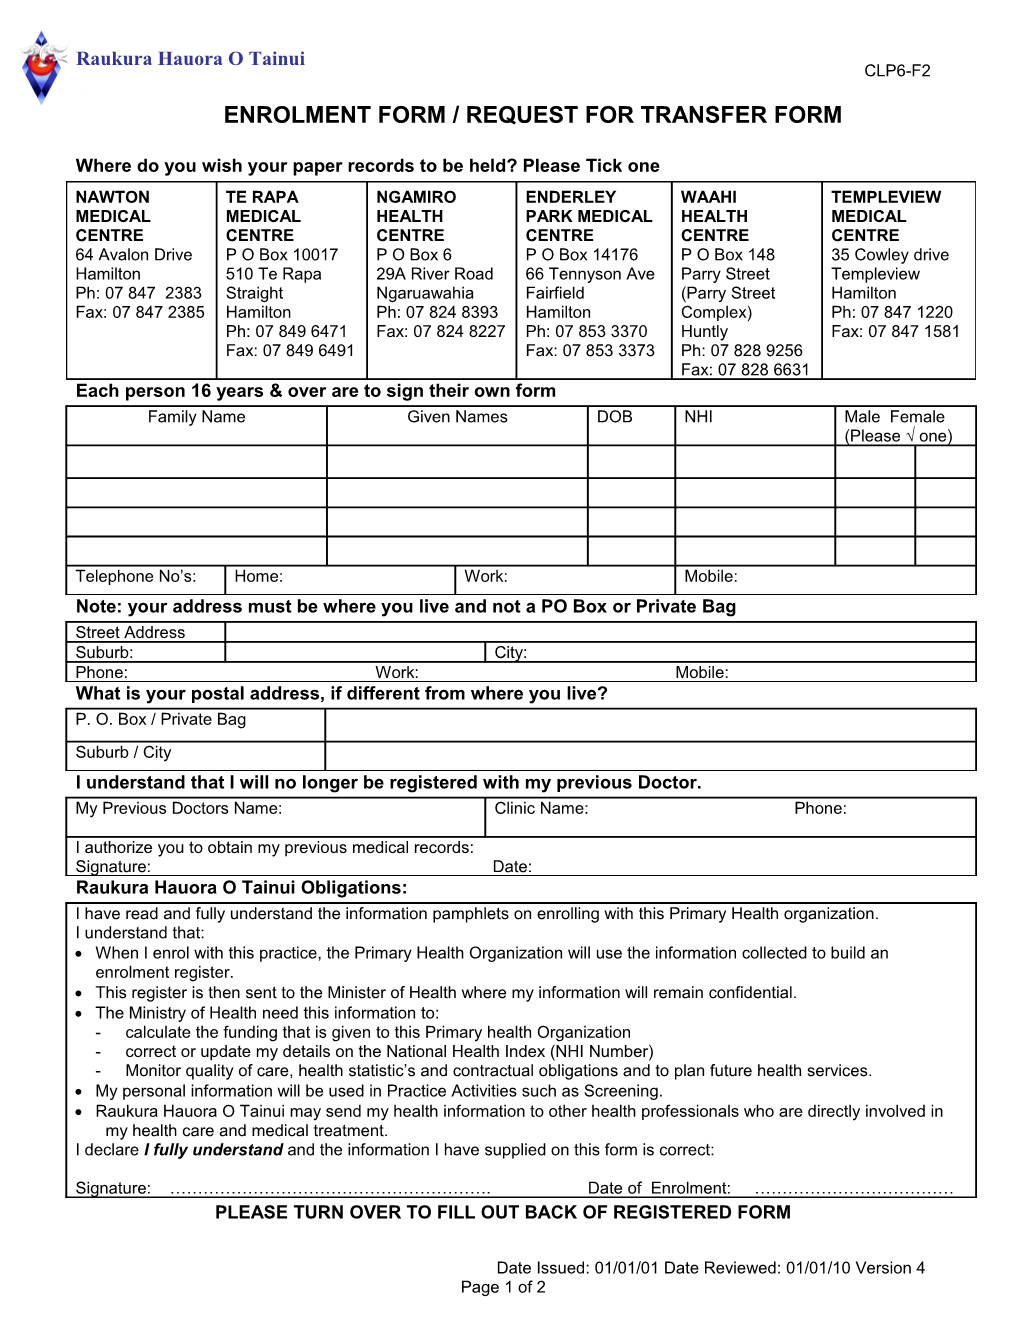 Enrolment Form / Request for Transfer Form